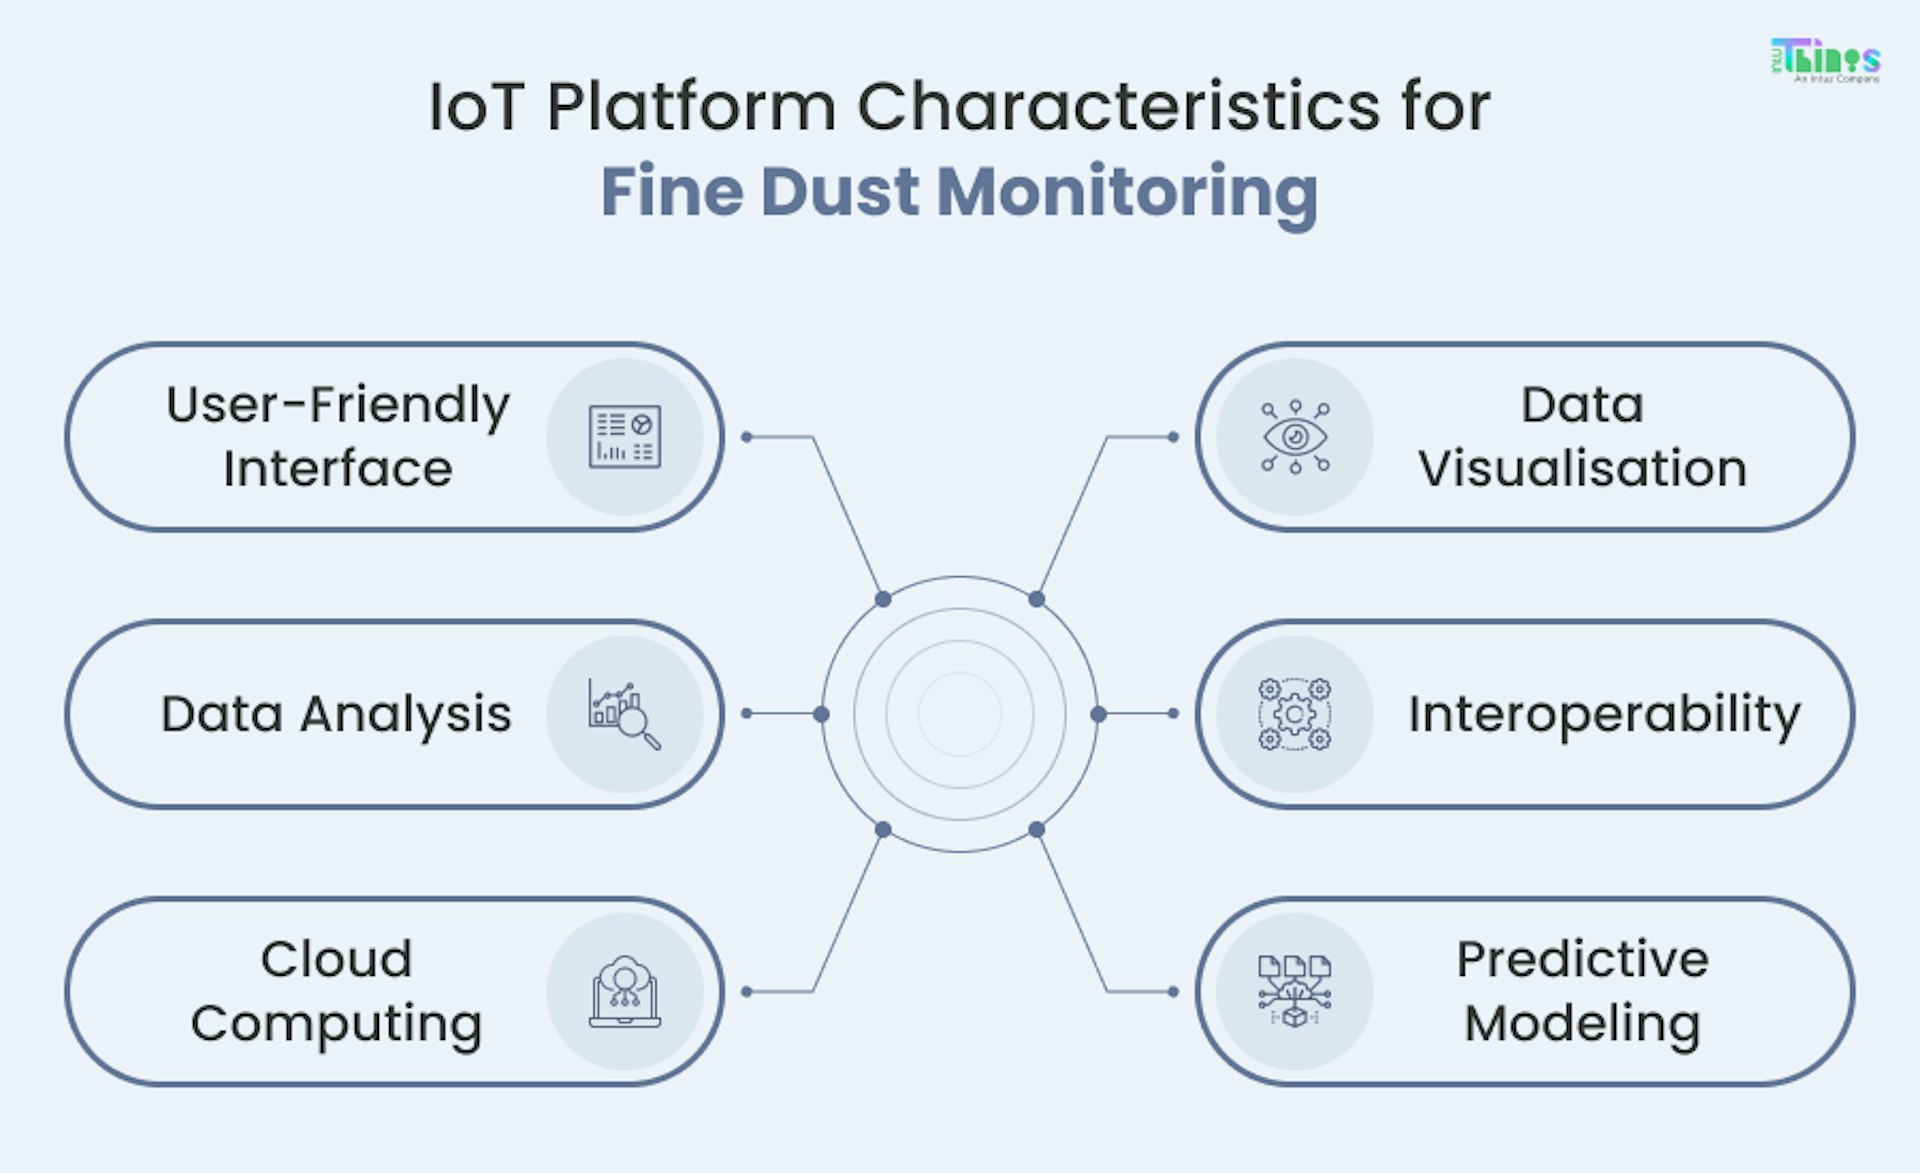 IoT Platform Characteristics for Fine Dust Monitoring